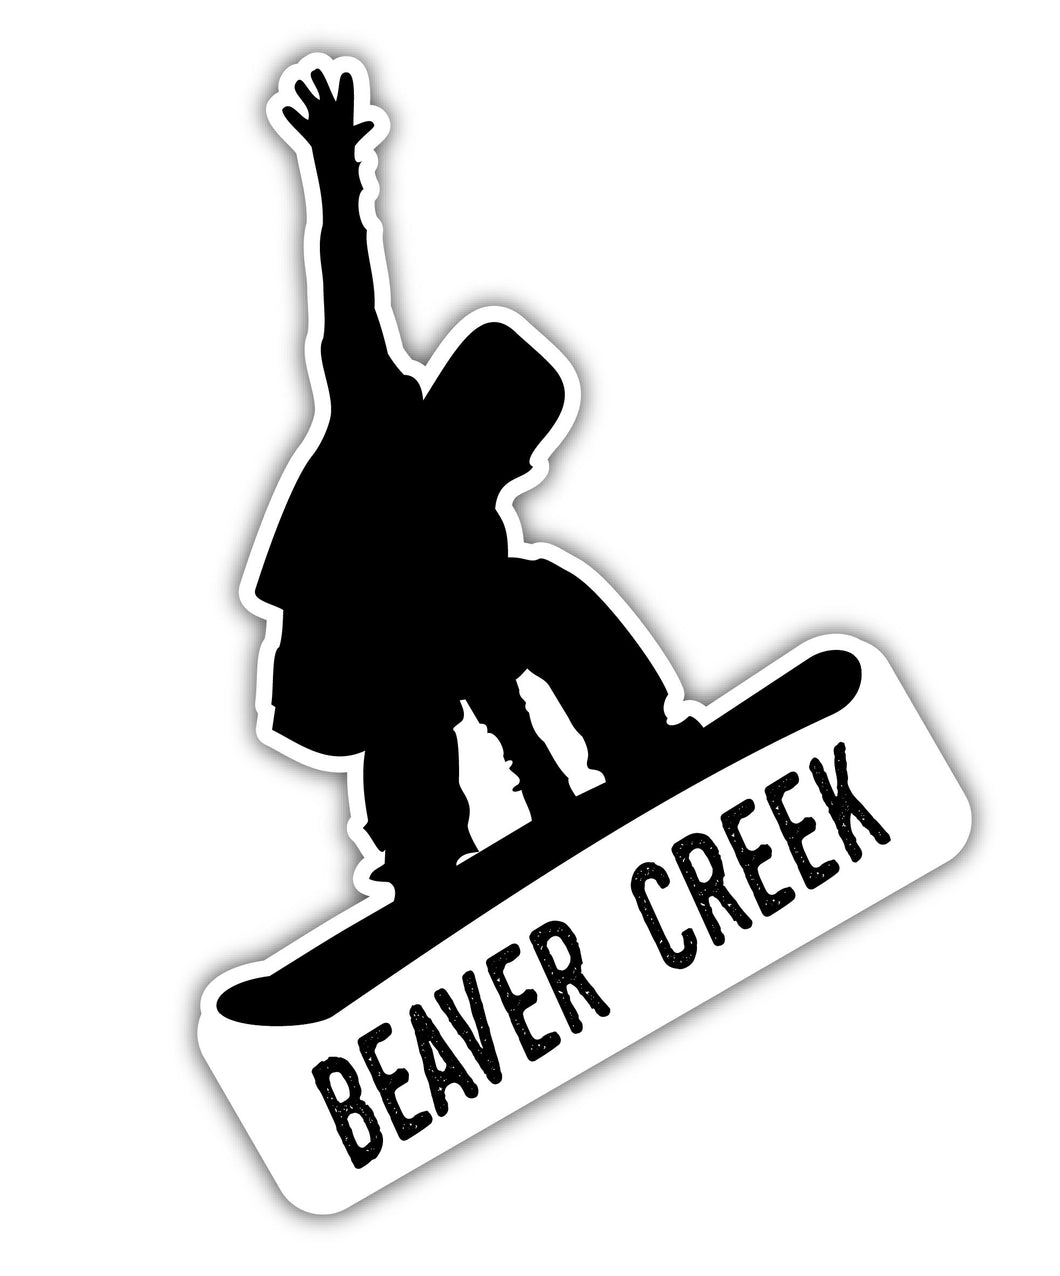 Beaver Creek Colorado Ski Adventures Souvenir Approximately 5 x 2.5-Inch Vinyl Decal Sticker Goggle Design